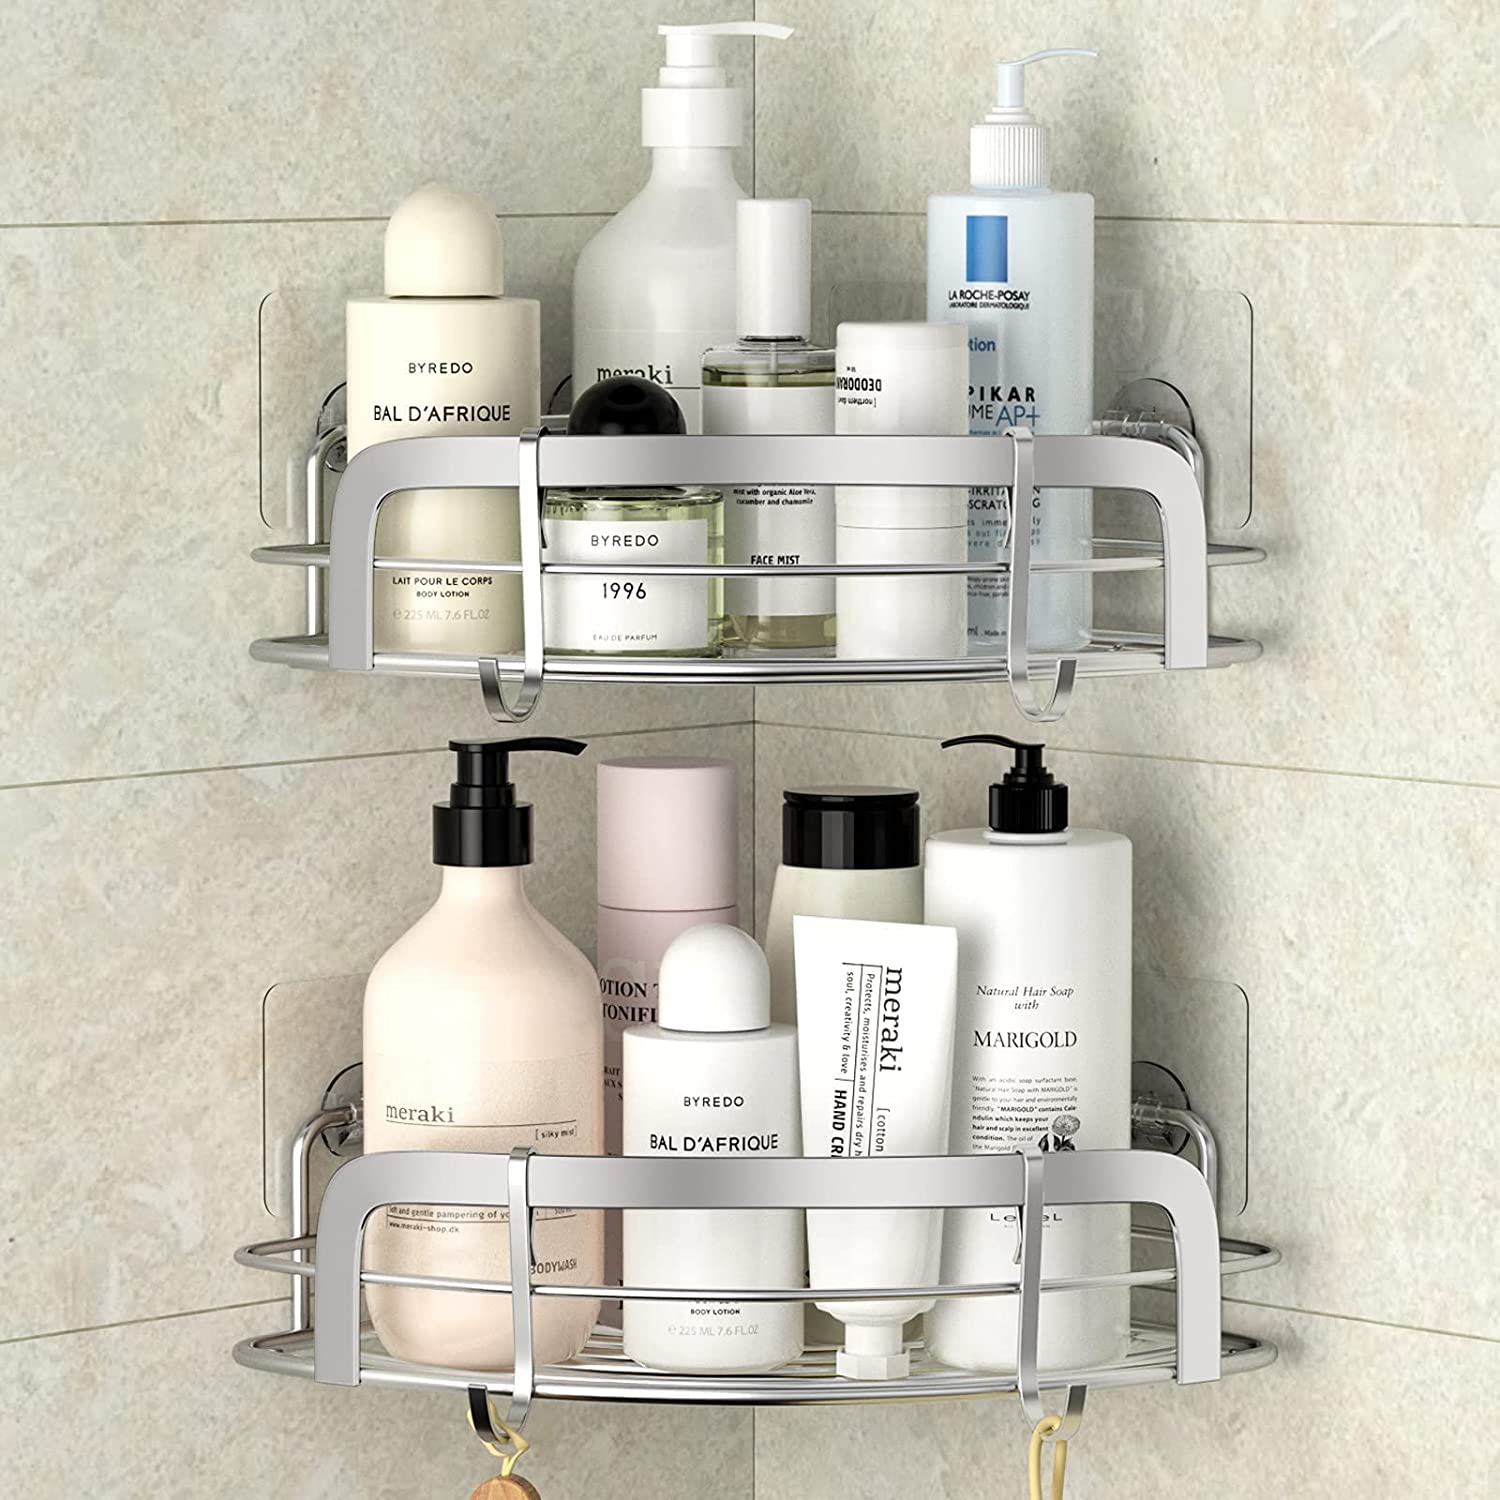 SMARTAKE 2-Pack Shower Caddy, Adhesive Bathroom Shelf Wall Mounted